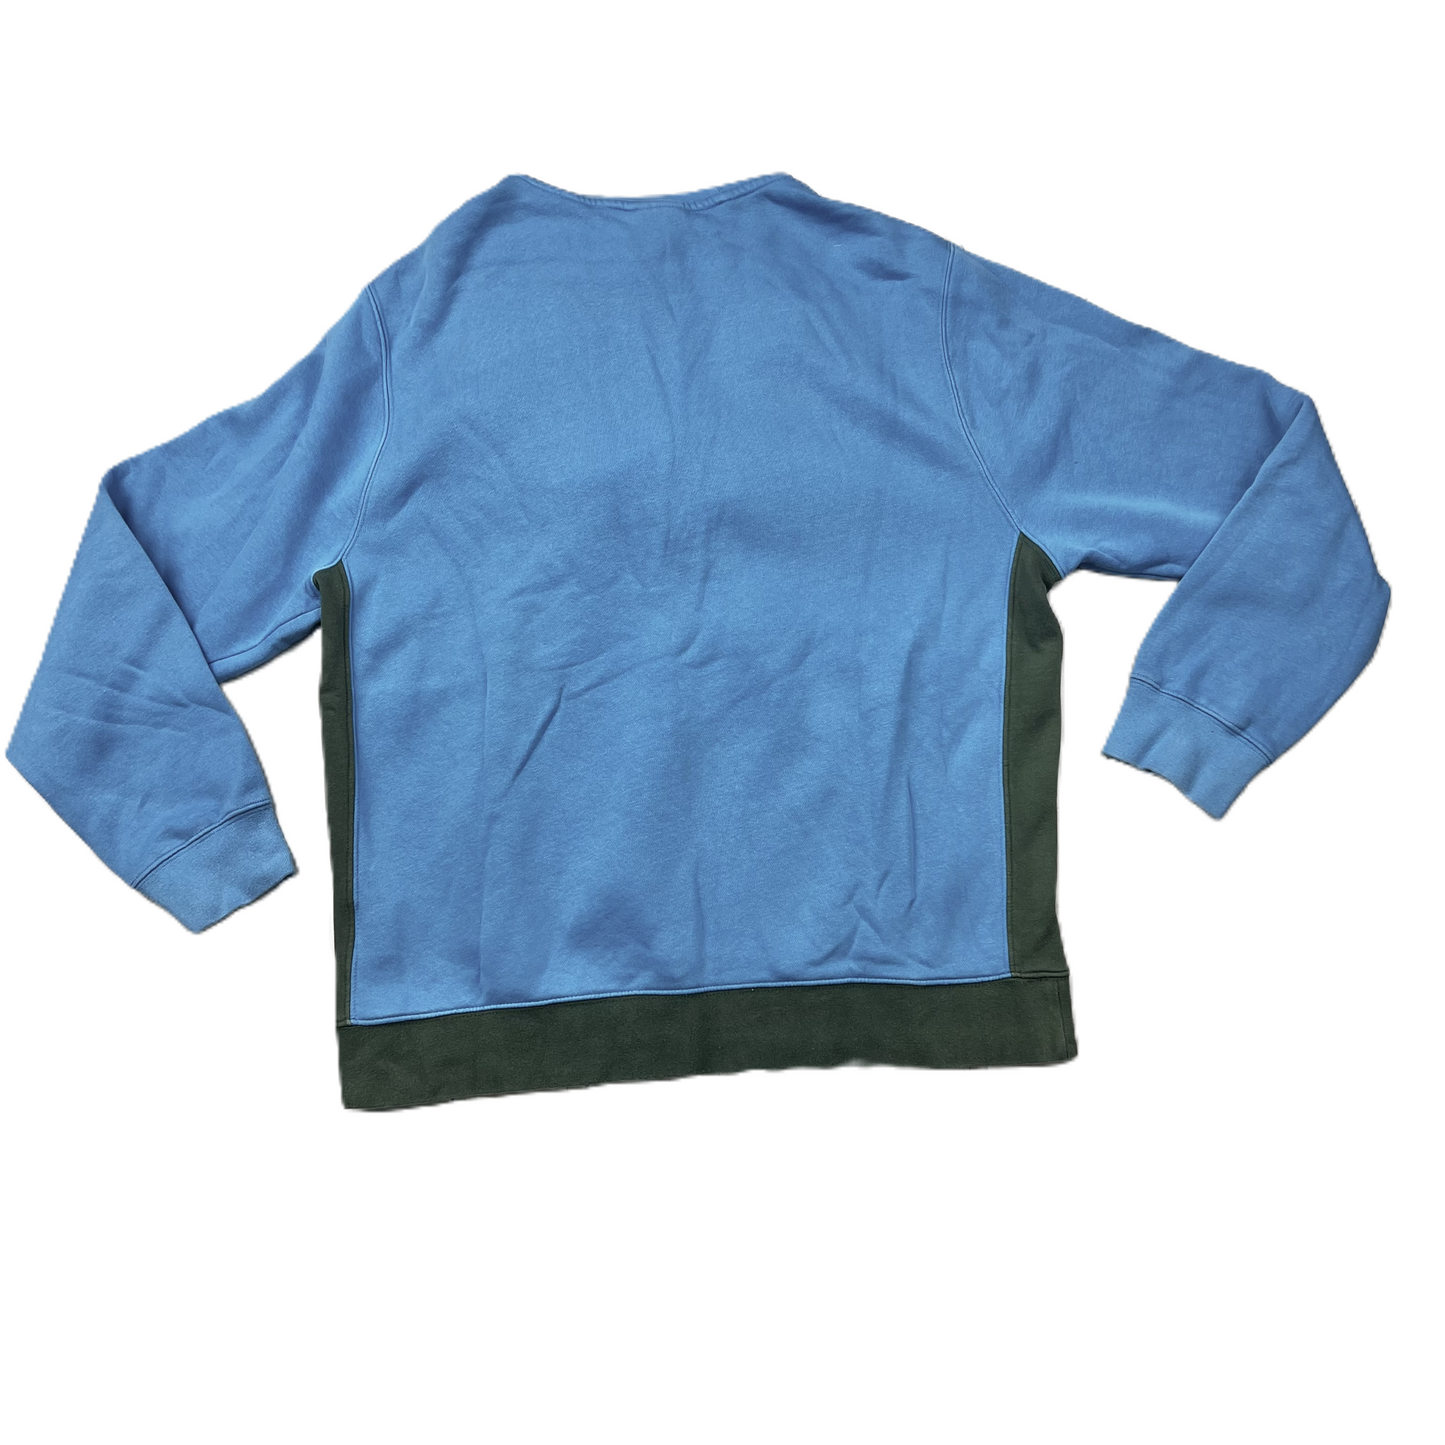 Blue & Green Athletic Sweatshirt Hoodie By Nike, Size: L